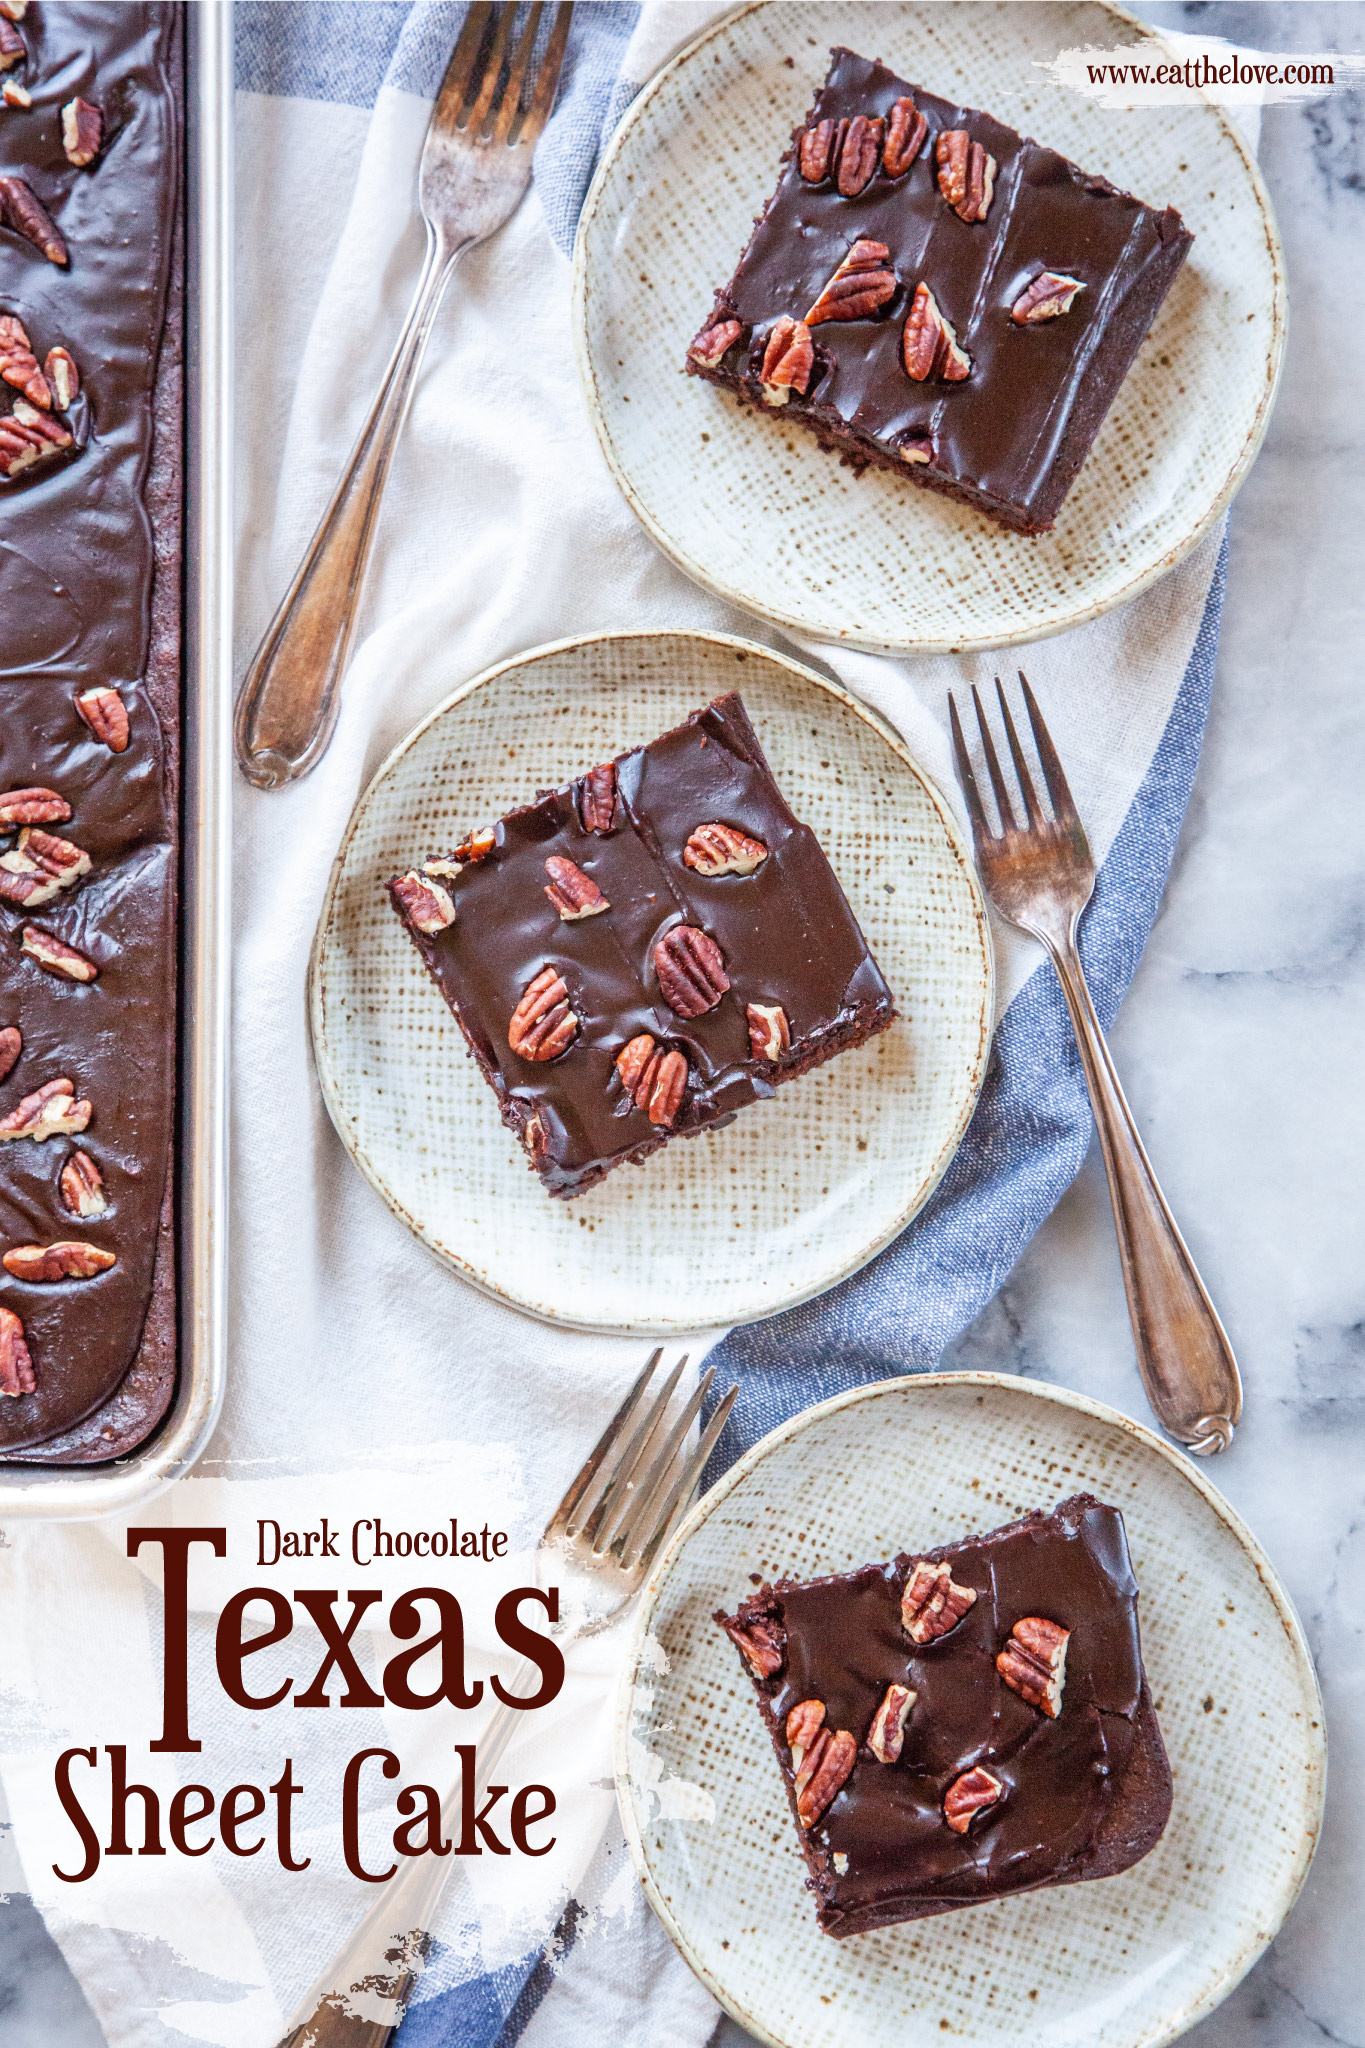 Texas Sheet Cake Recipe